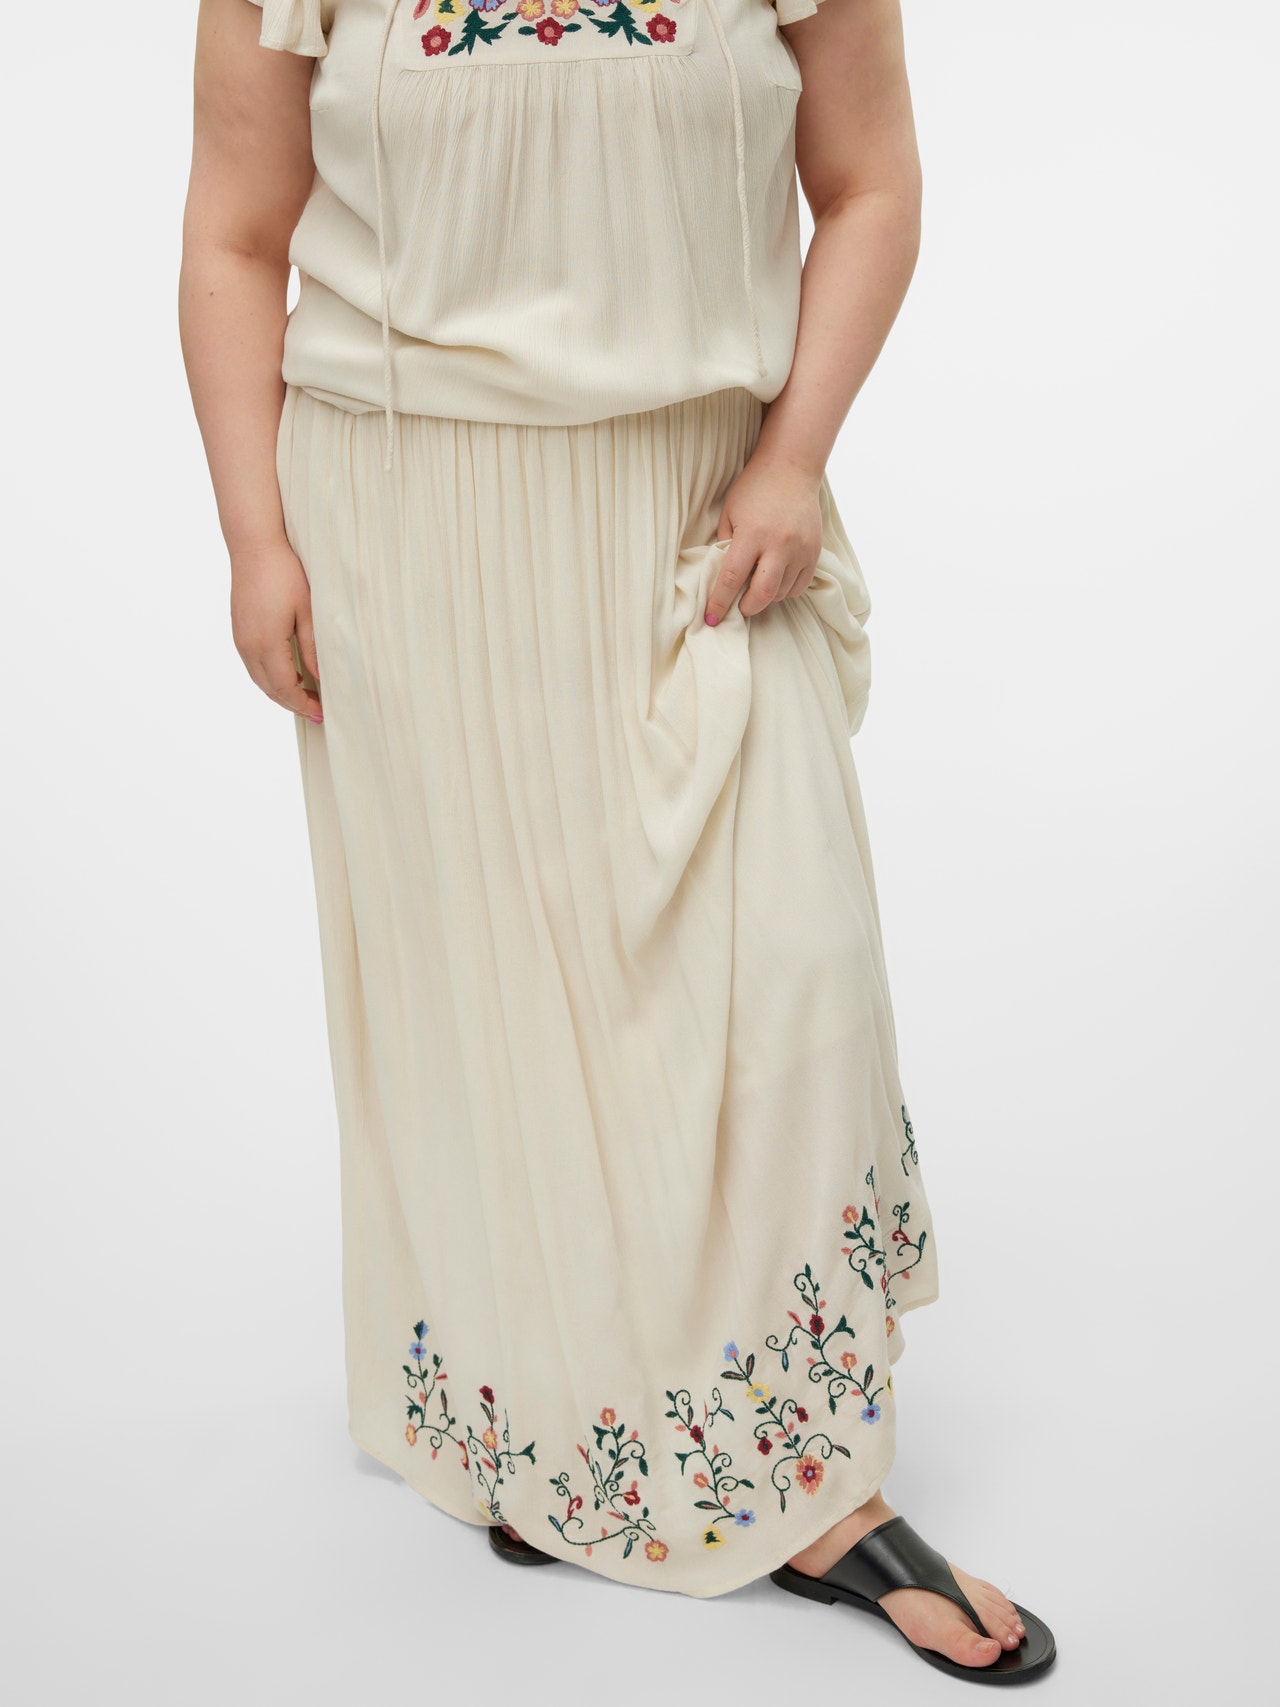 Vero Moda VMSINA High waist Long skirt -Birch - 10314603